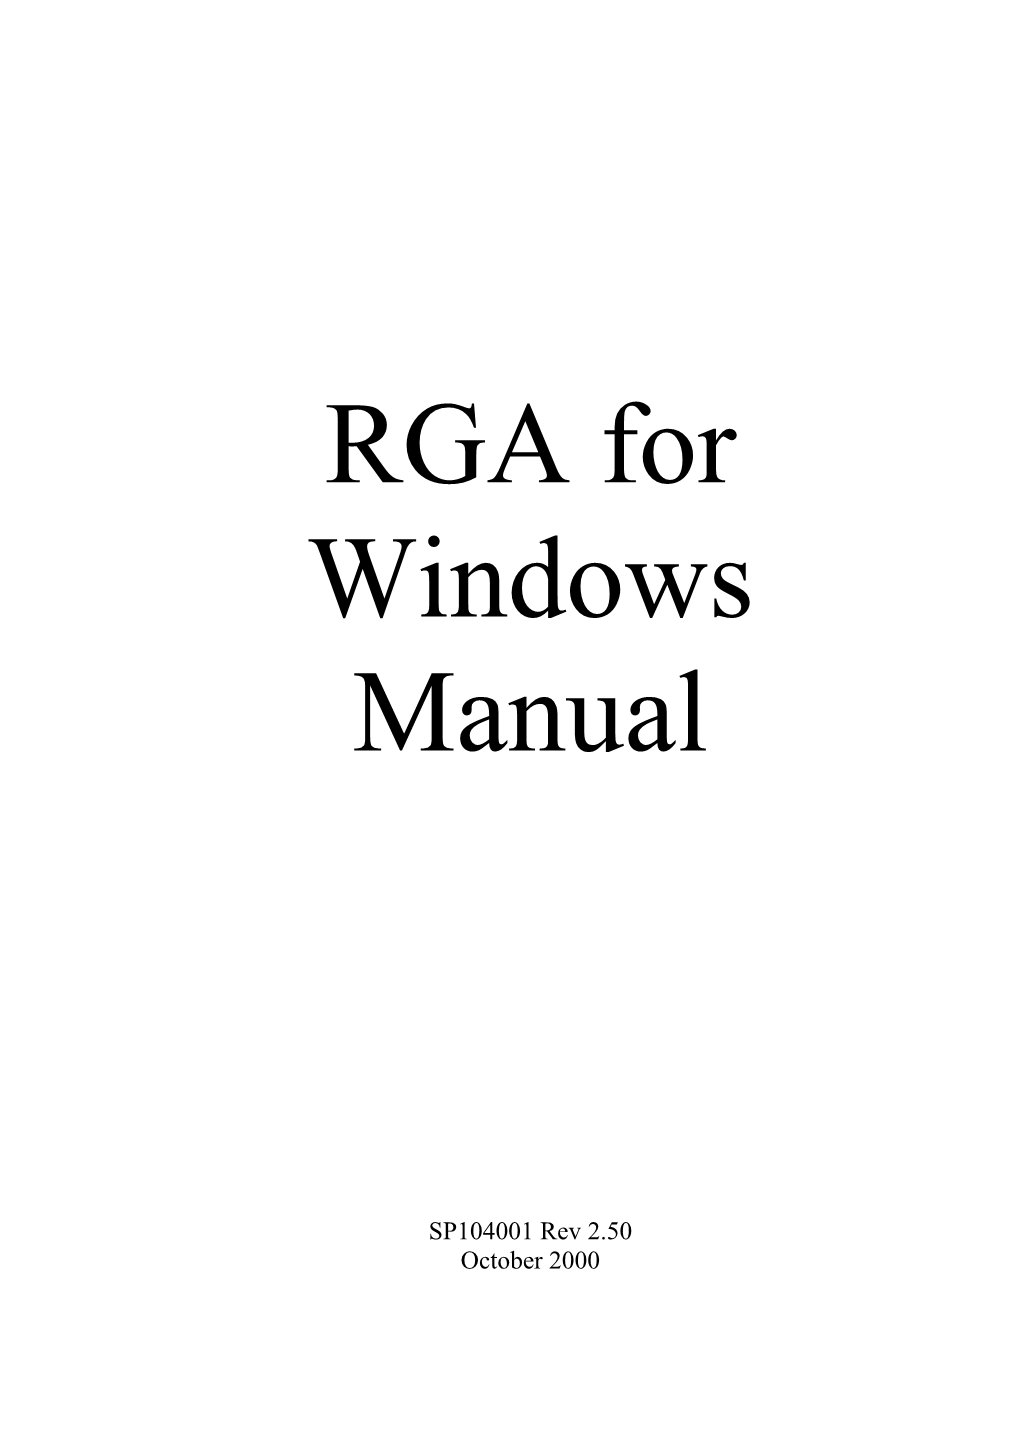 RGA for Windows Help Manual